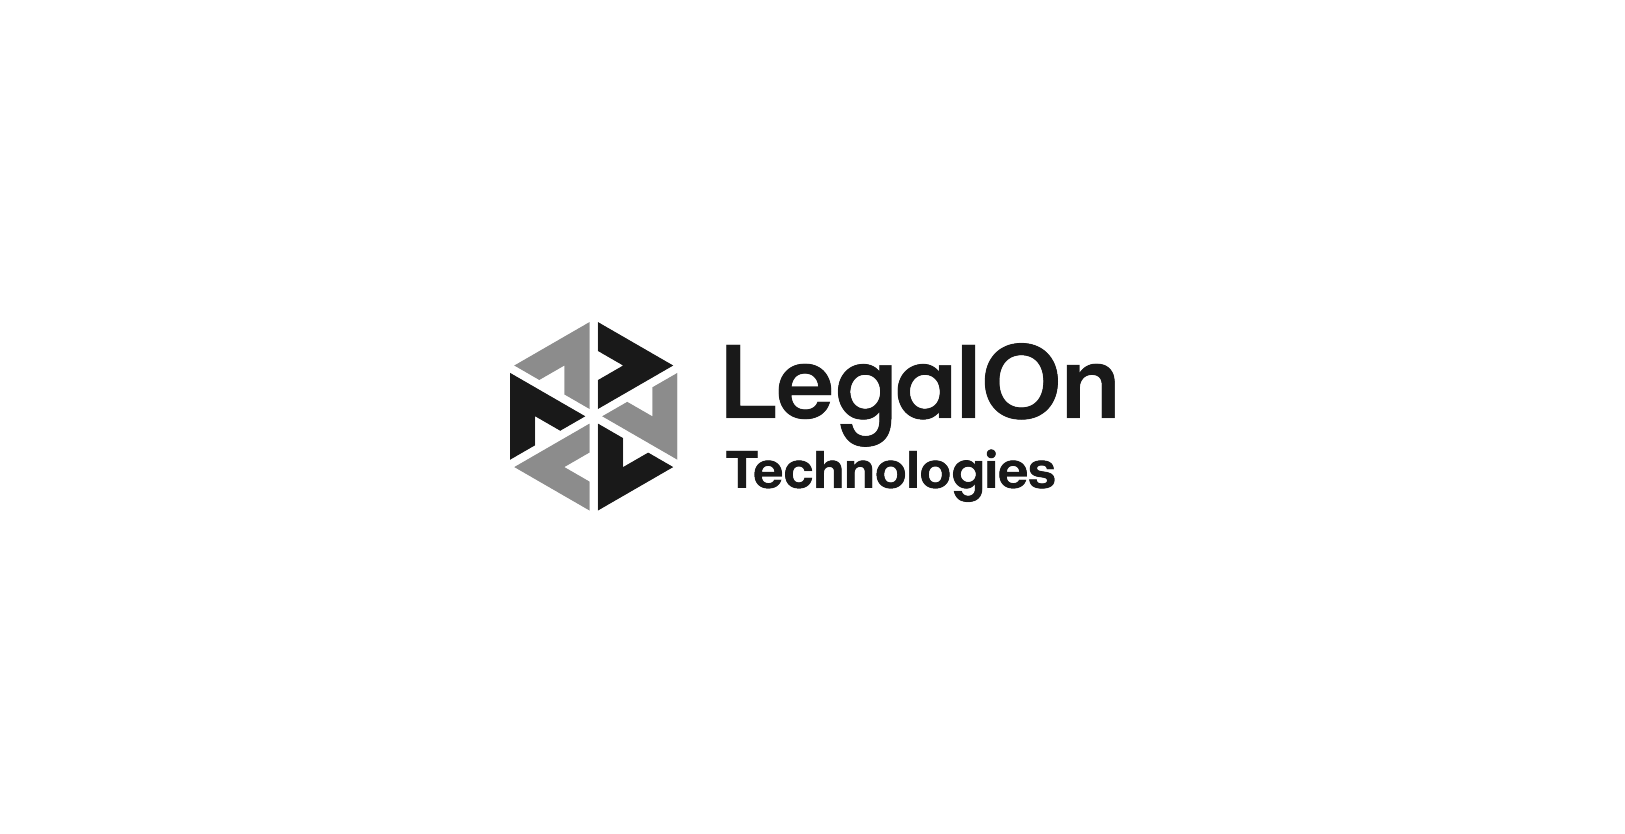 Vision Fund investment portfolio company LegalOn's logo